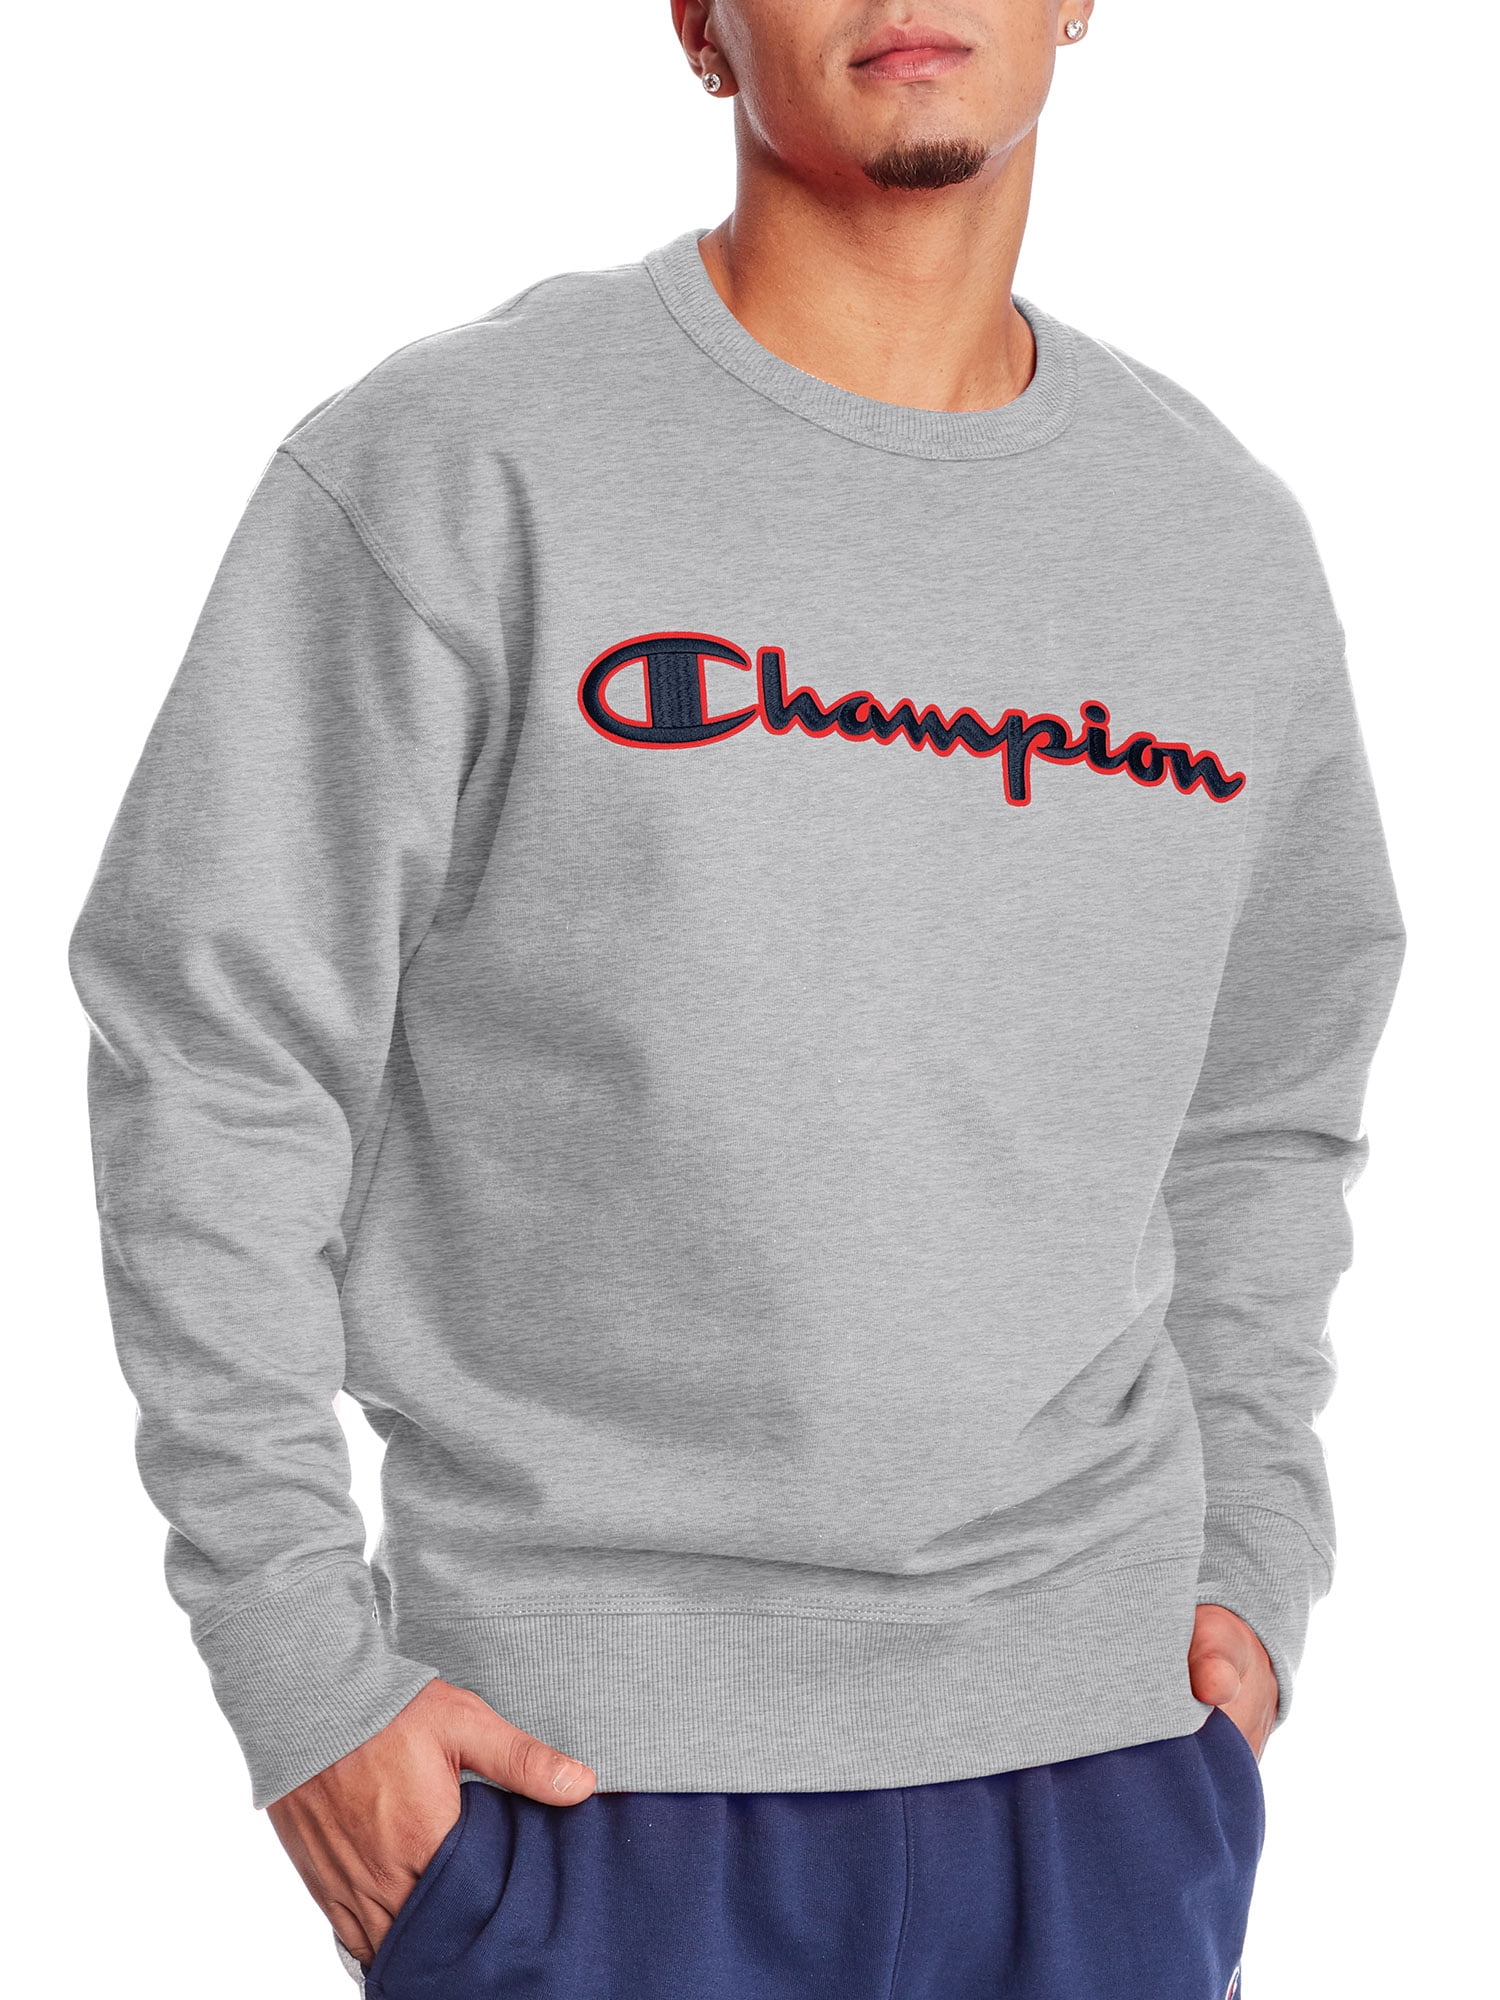 Champion - Champion Men's Powerblend Applique Crew - Walmart.com ...